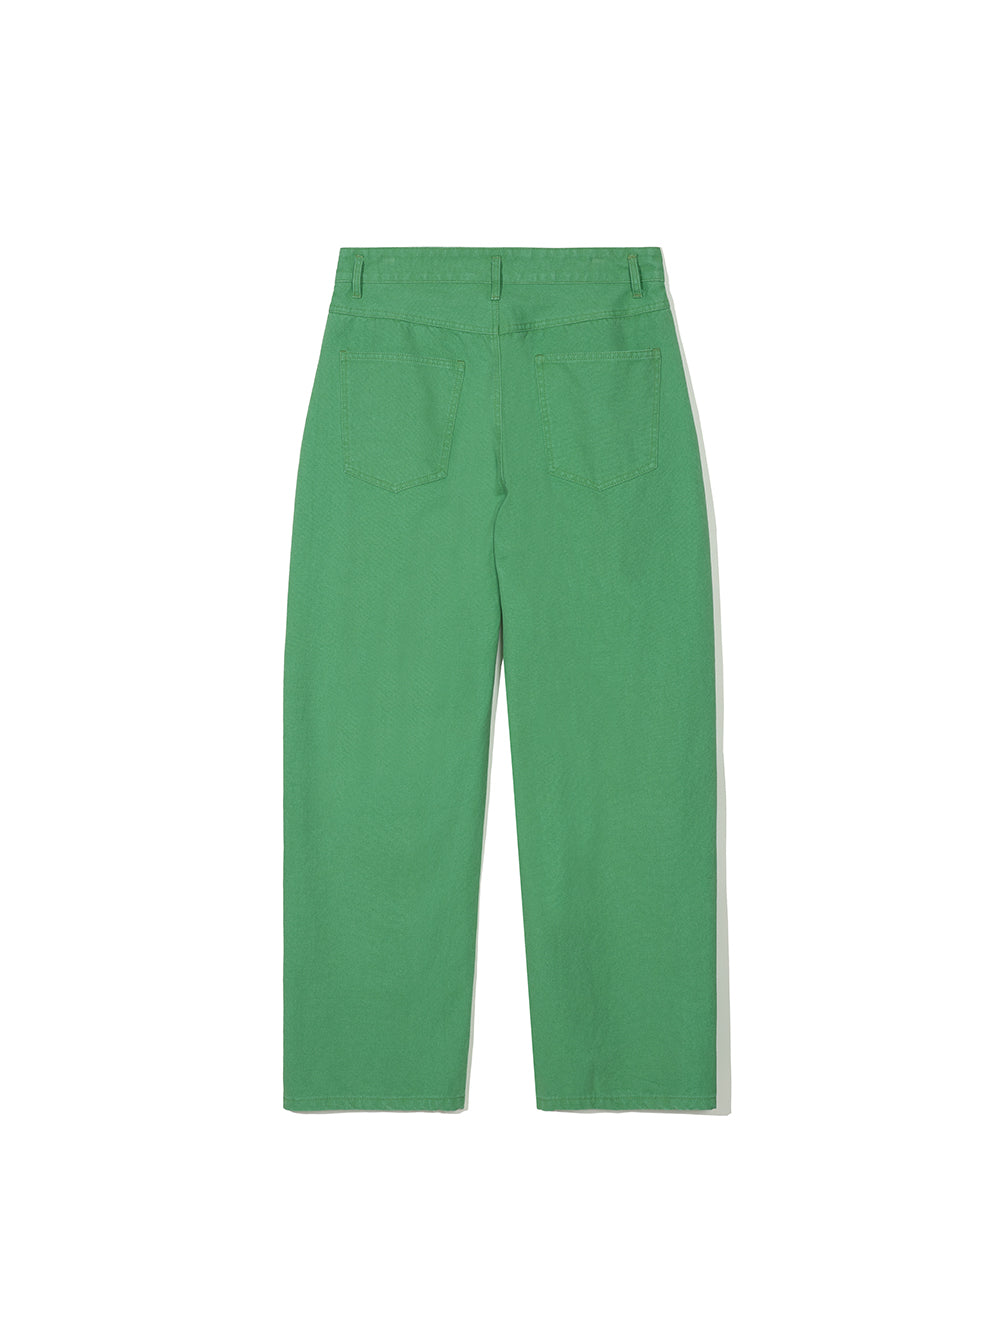 Stone Washing Chino Pants in Green